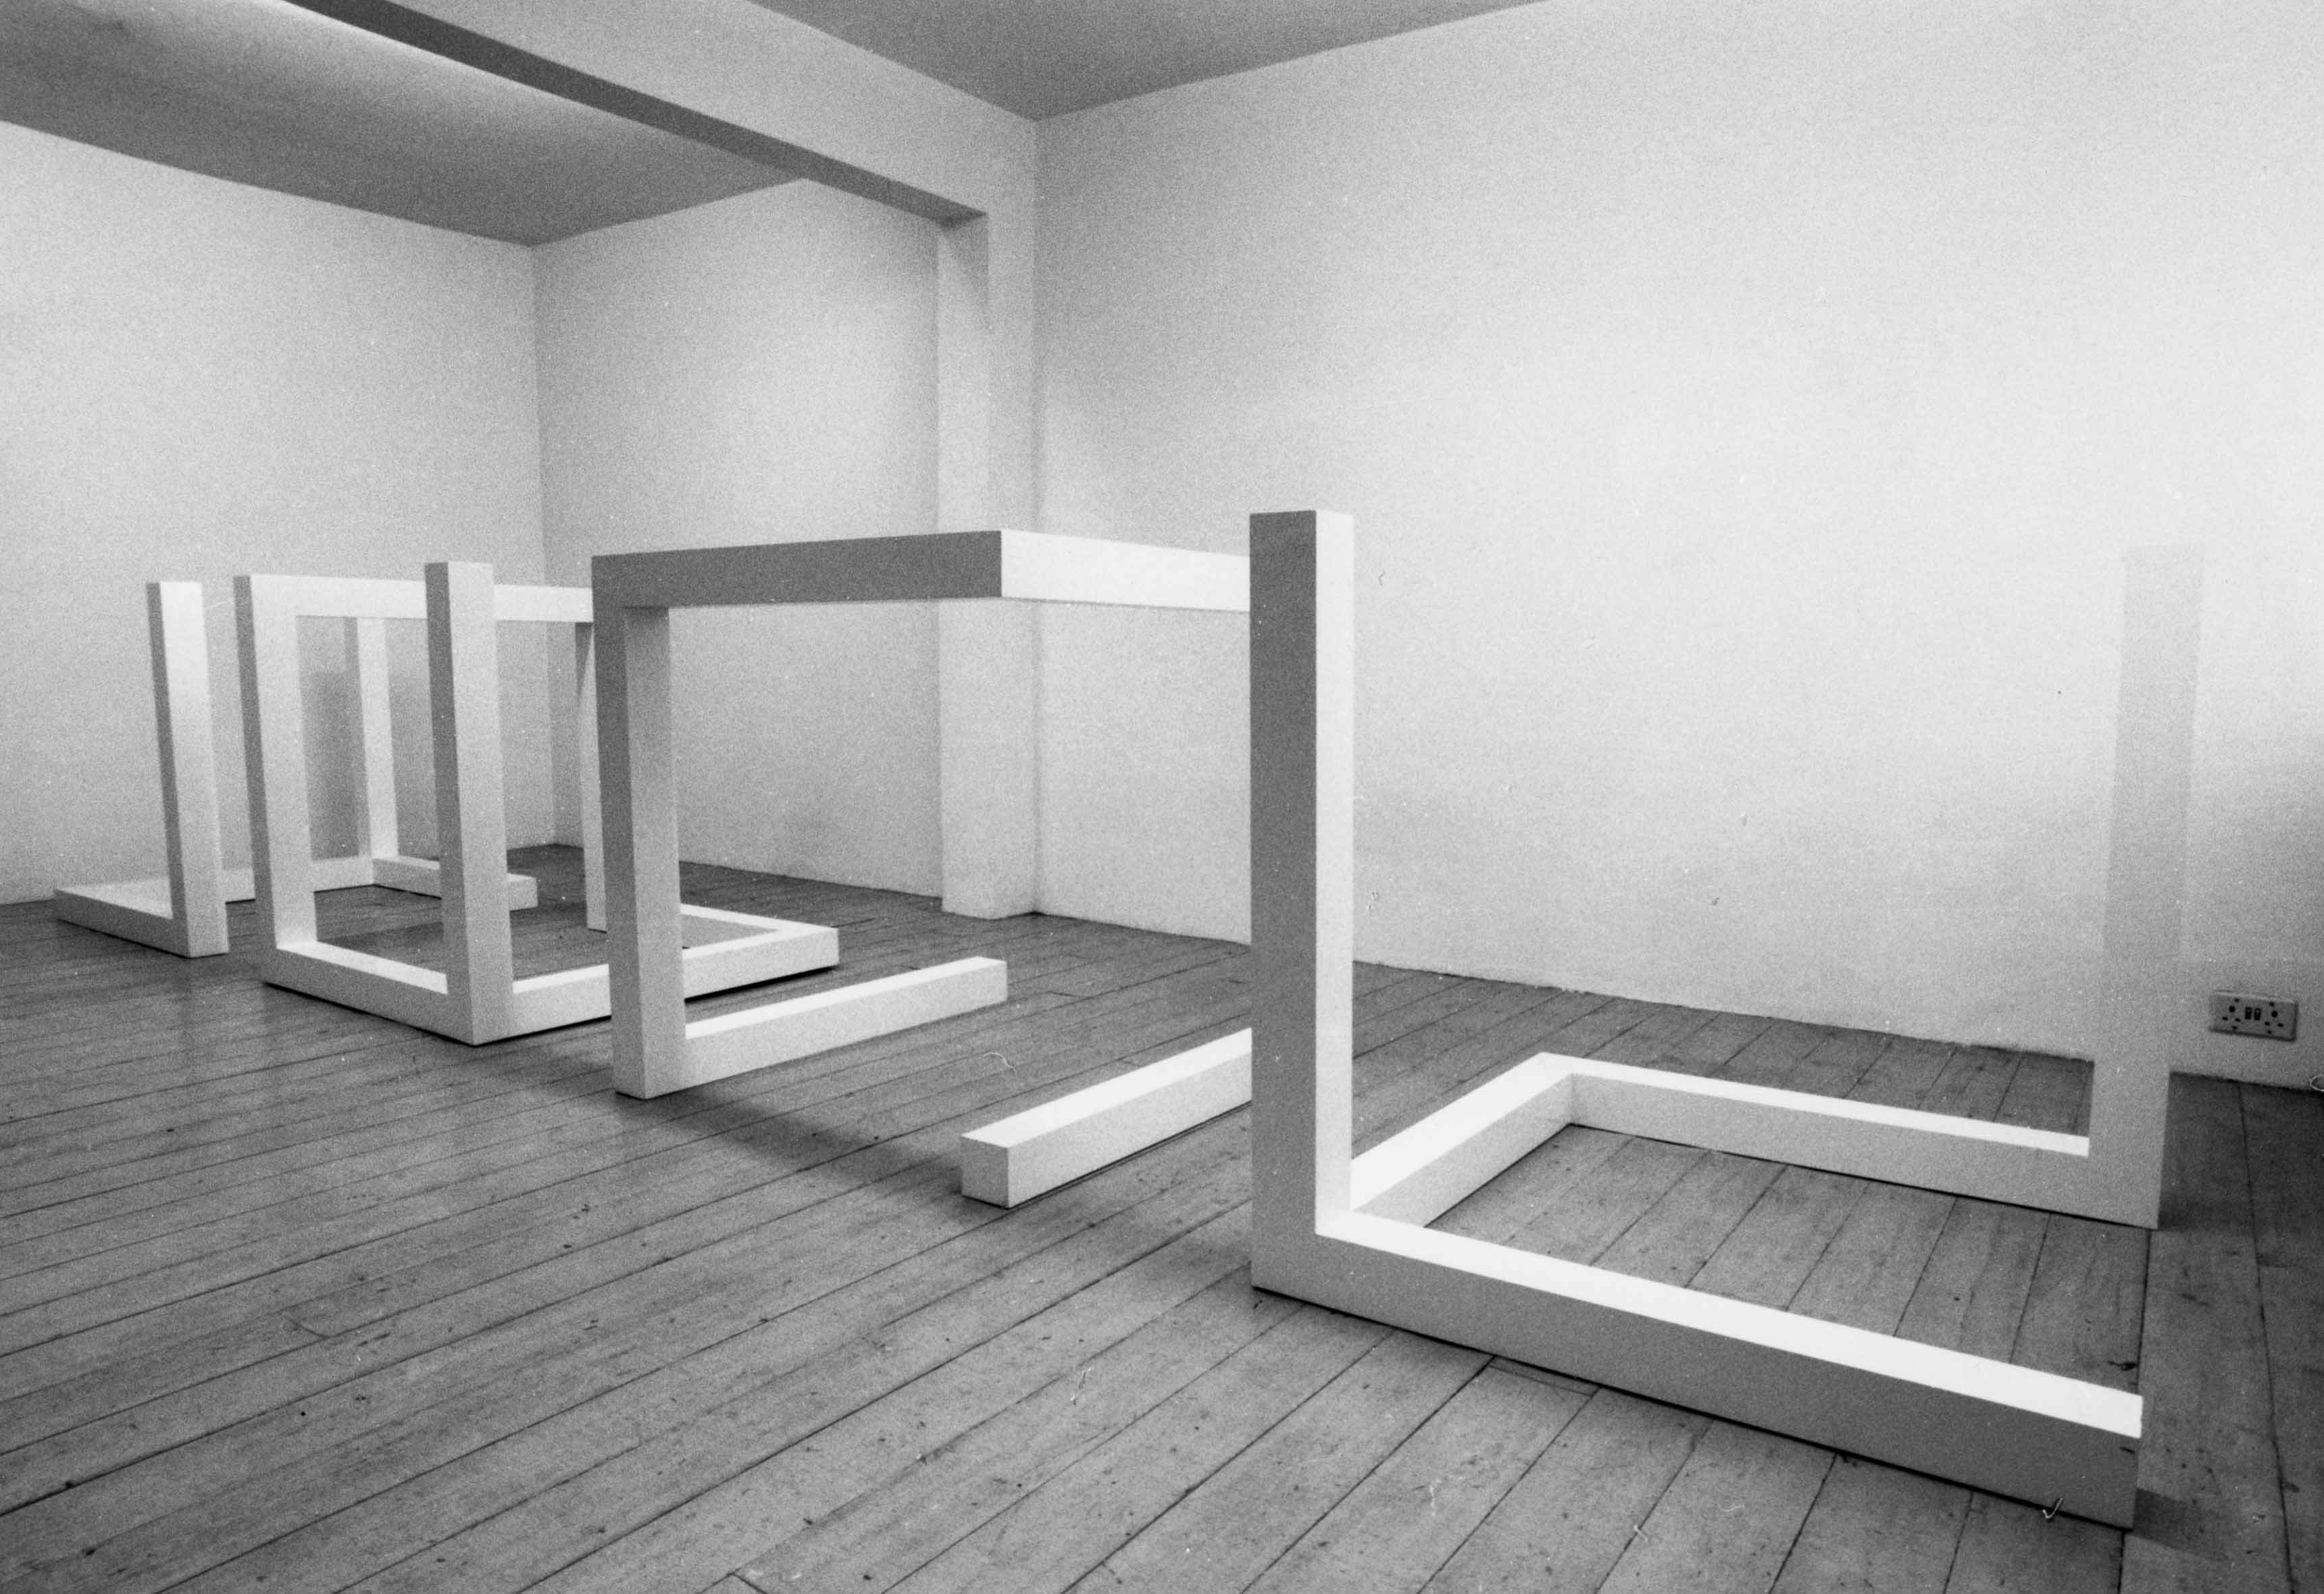 Vue de l'exposition “New Works - Structures & early working drawings” (1977) de Sol Lewitt, à la Lisson Gallery